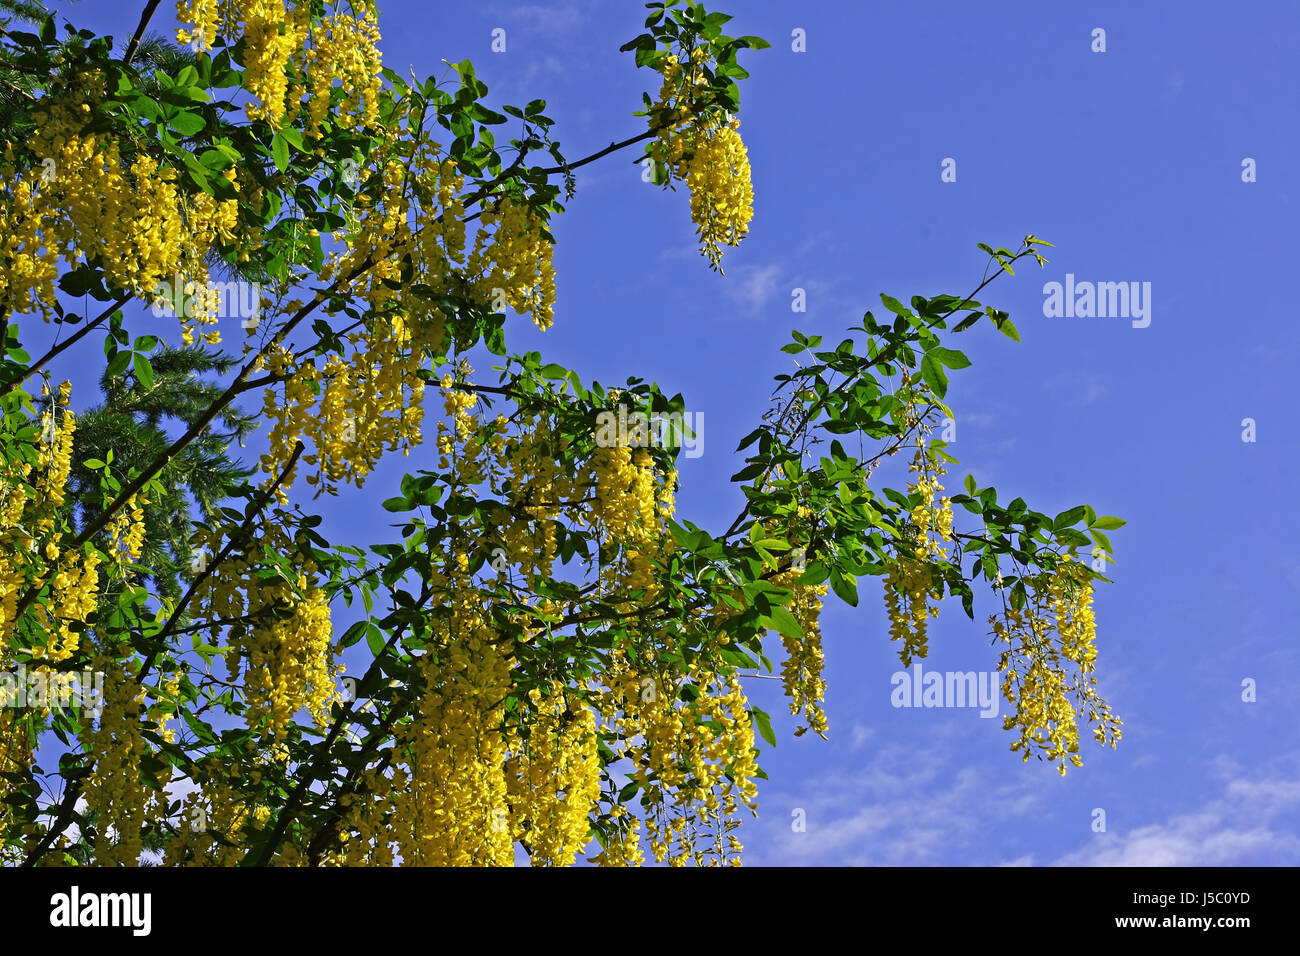 Arbre arbuste vert schmetterlingsbltler glycinie laburnum jaunes blauer himmel Banque D'Images